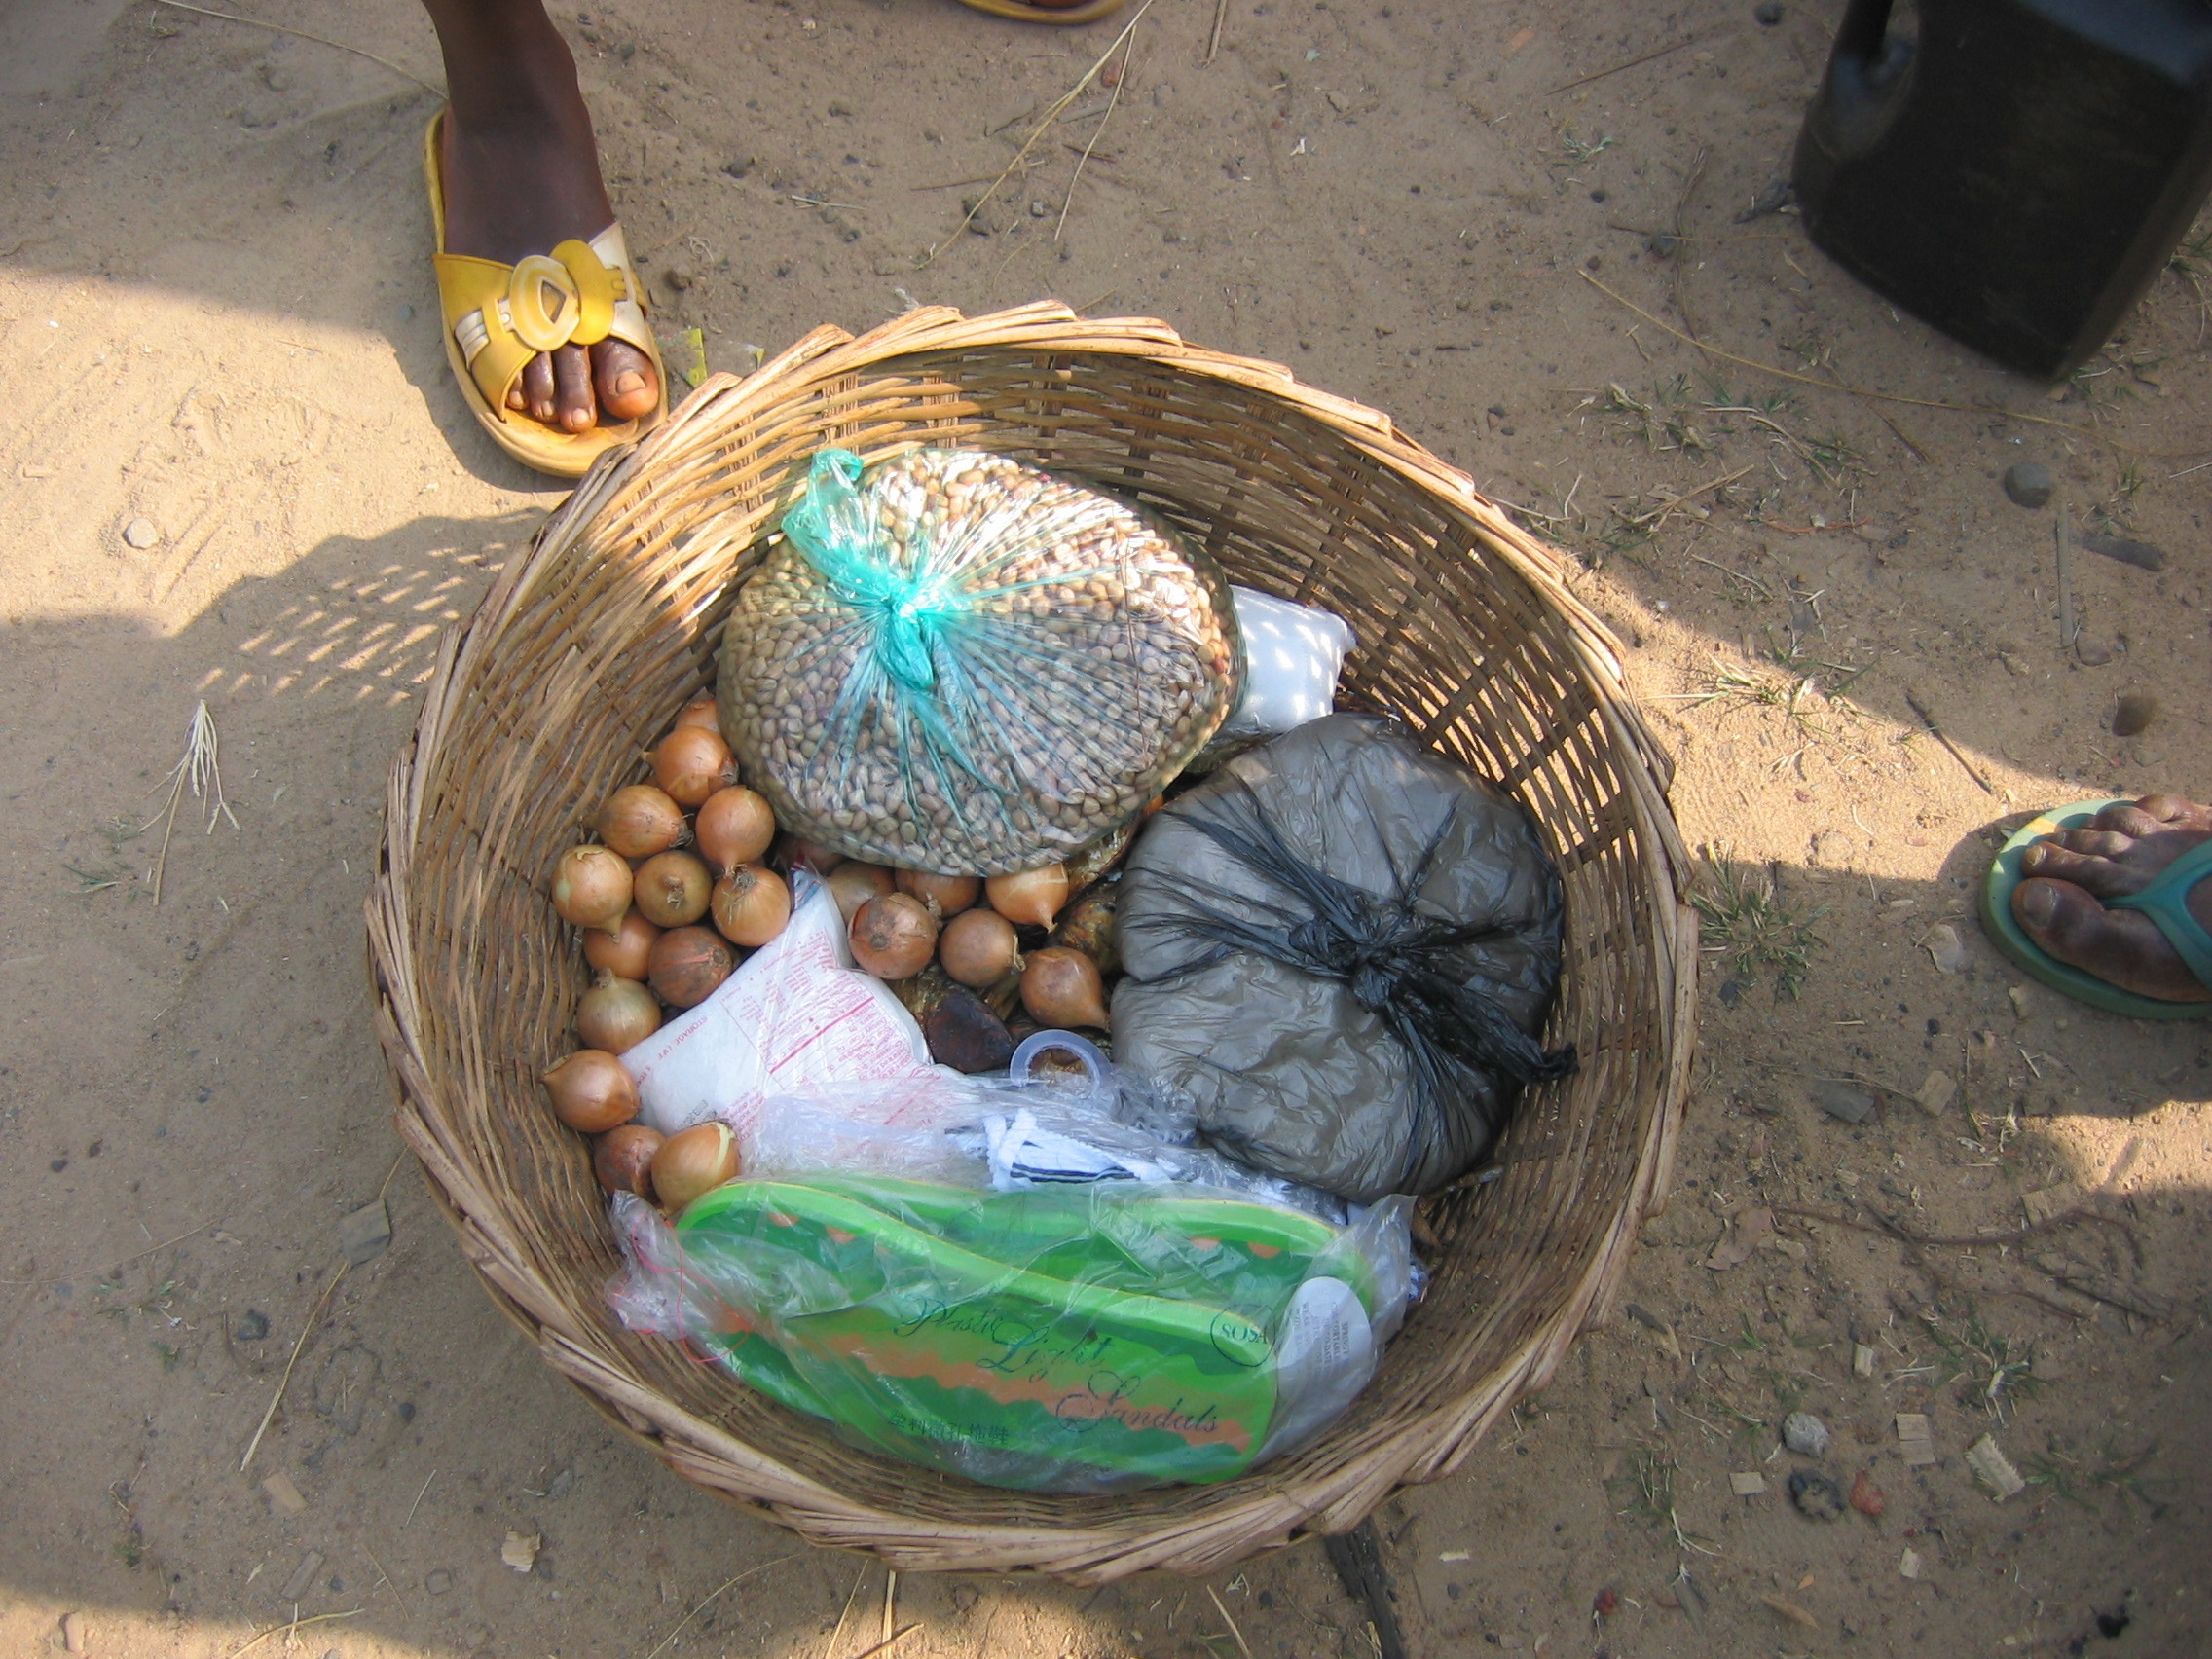 Basket of goods from the market. (c) Estelle Levin